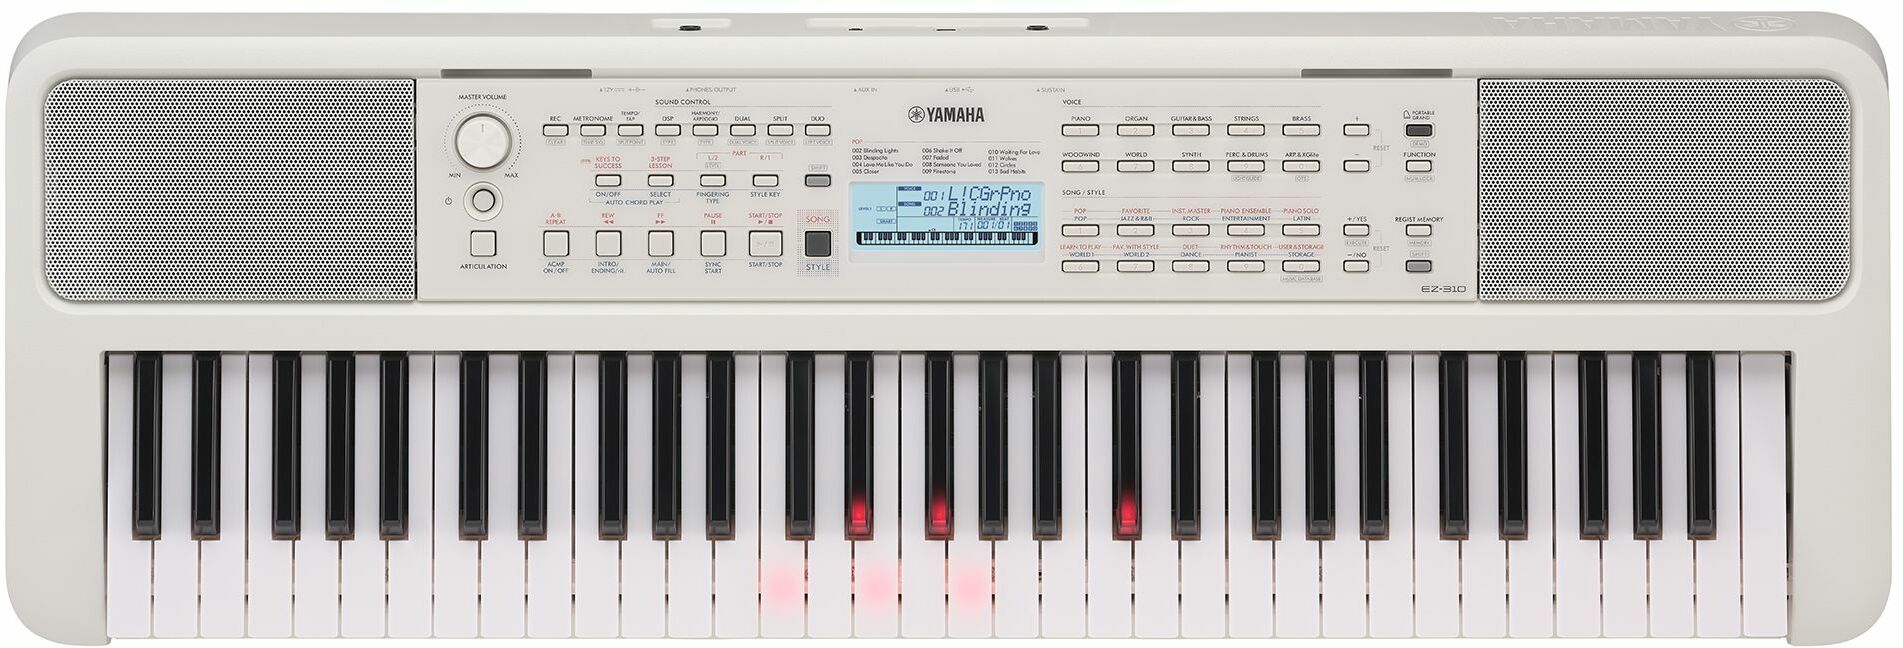 Yamaha Ez-310 - Entertainer Keyboard - Main picture